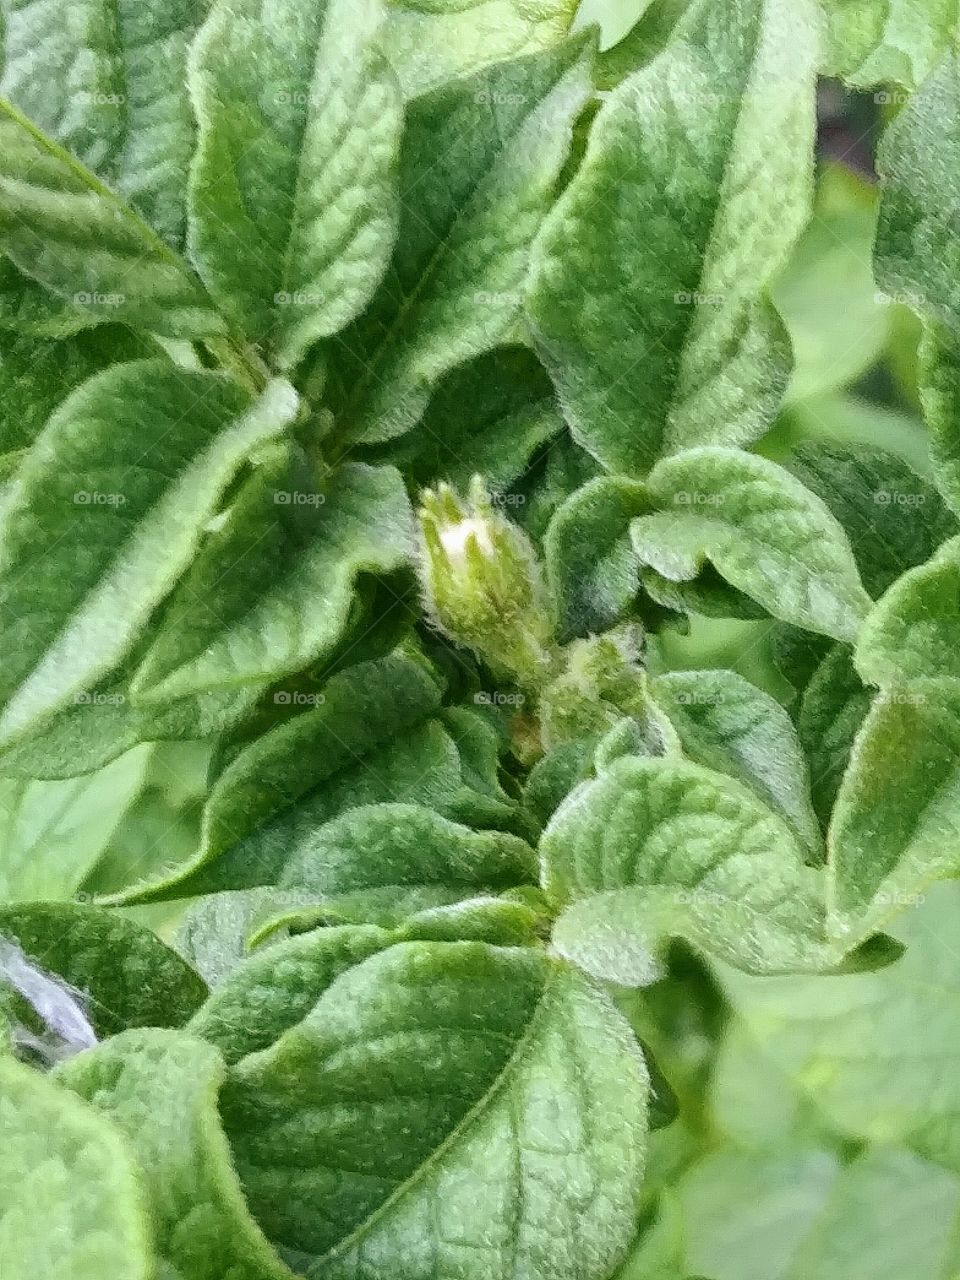 flower bud on a potato plant